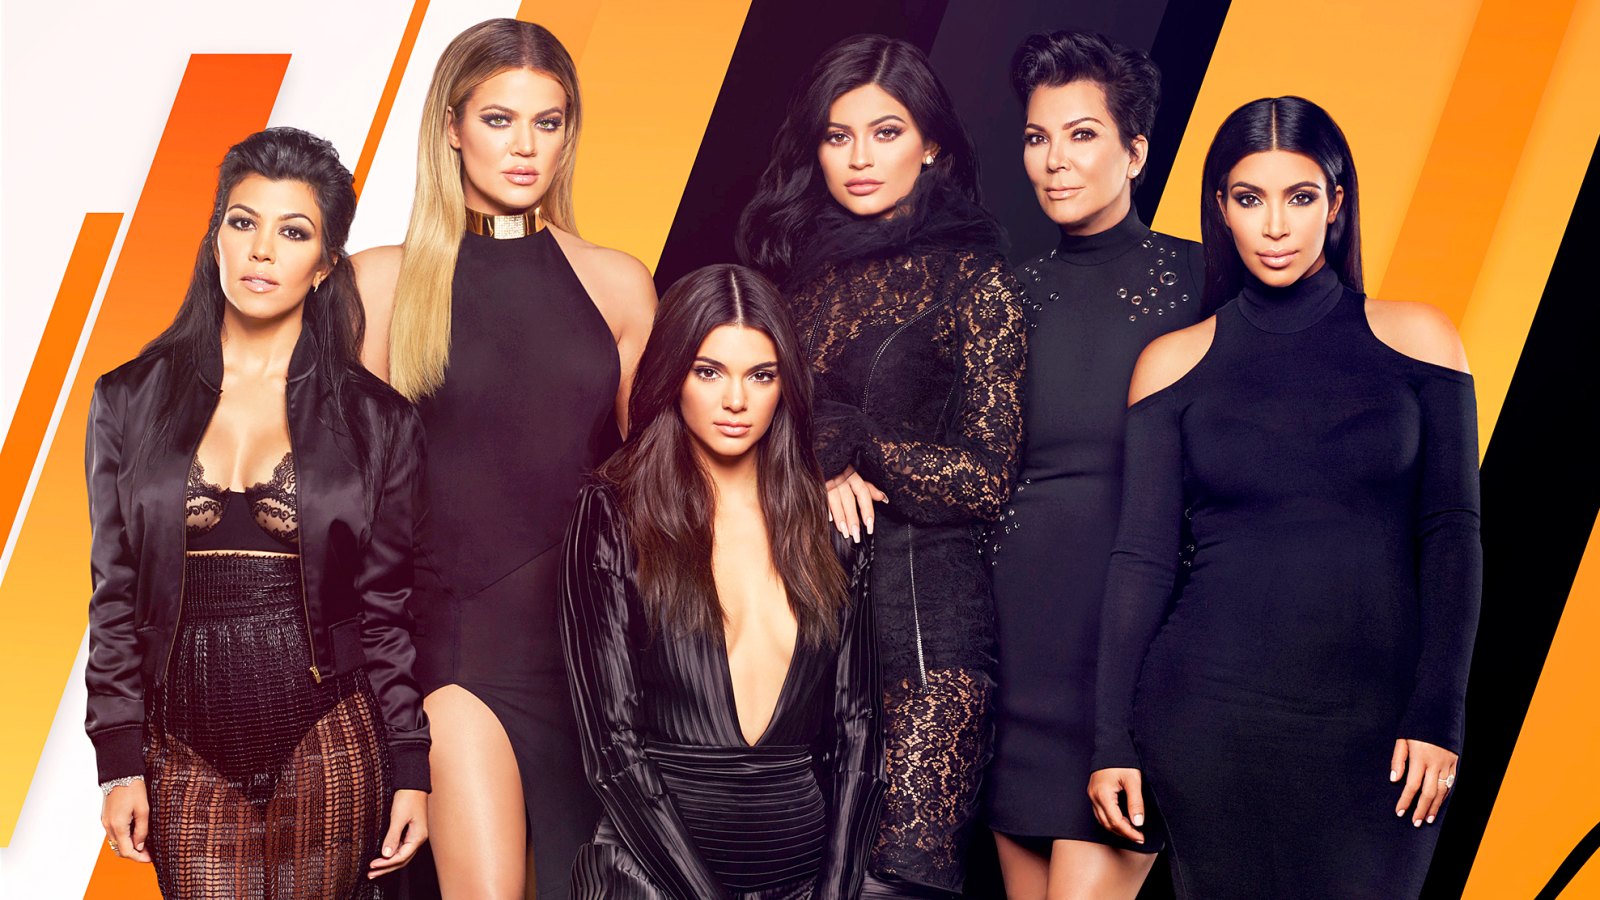 ‘Keeping Up With The Kardashians‘ stars Kourtney Kardashian, Khloe Kardashian, Kendall Jenner, Kylie Jenner, Kris Jenner and Kim Kardashian